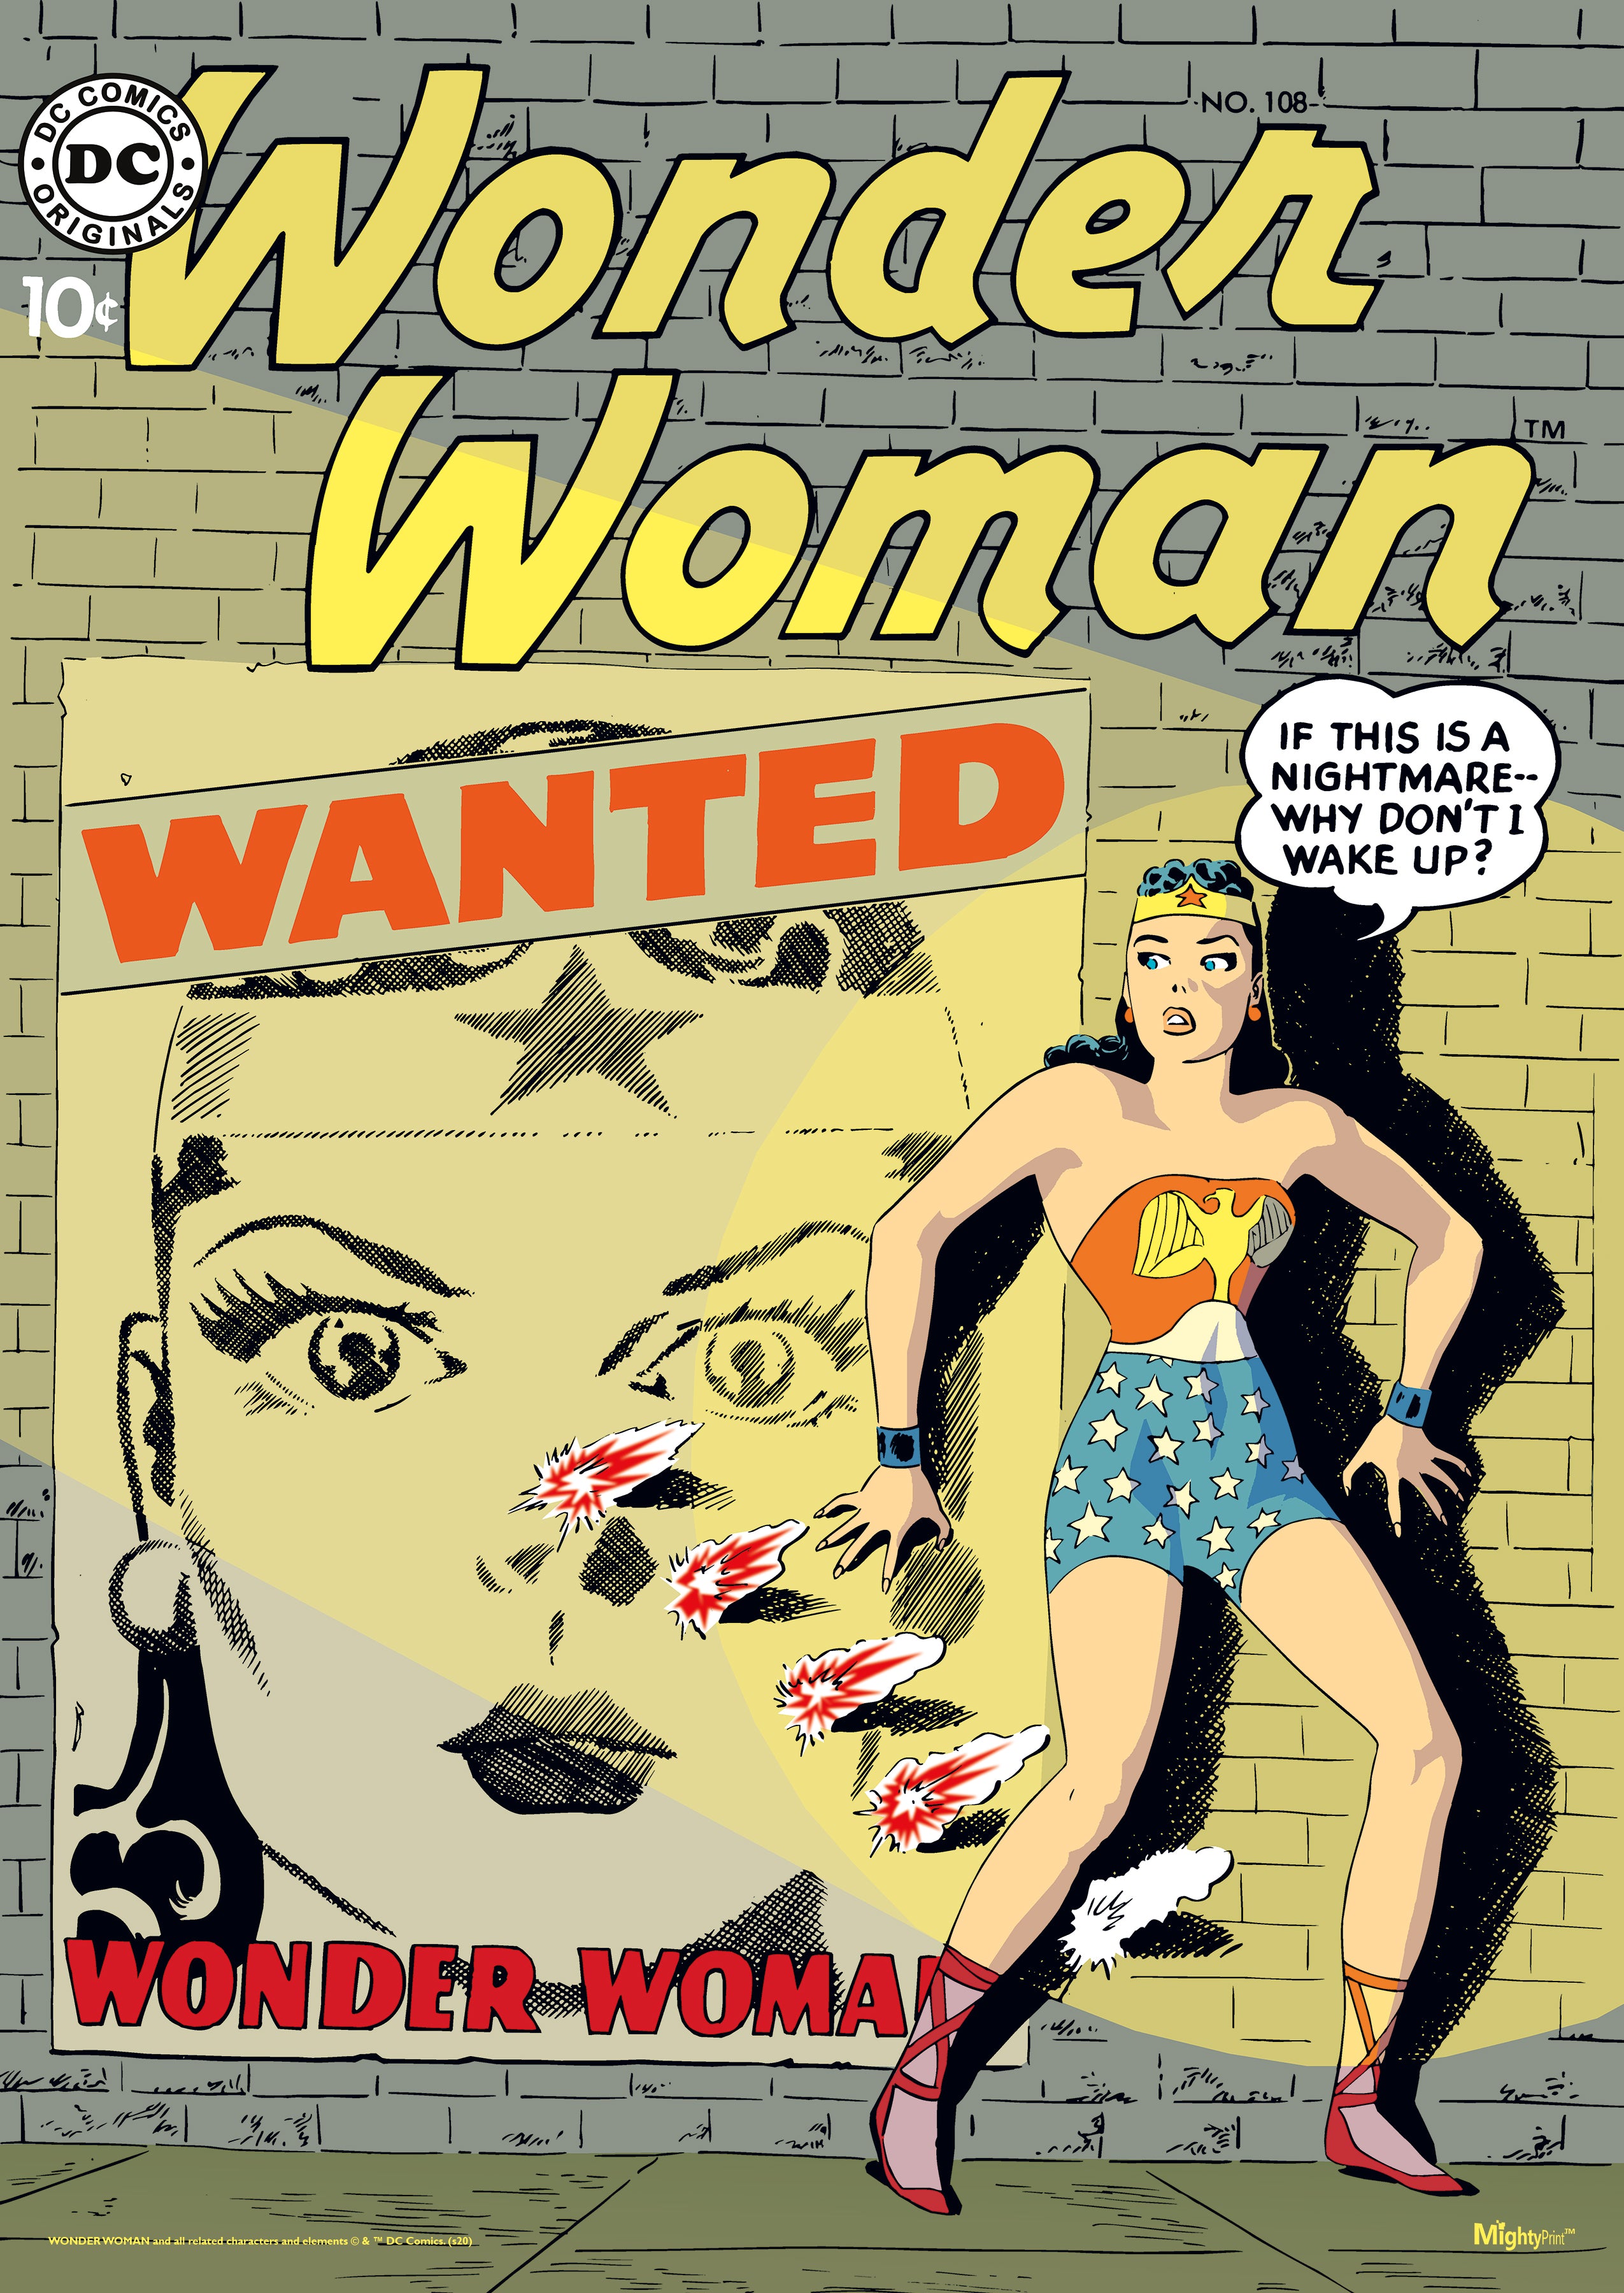 DC Comics (Wonder Woman - Wanted) MightyPrint™ Wall Art MP17240595